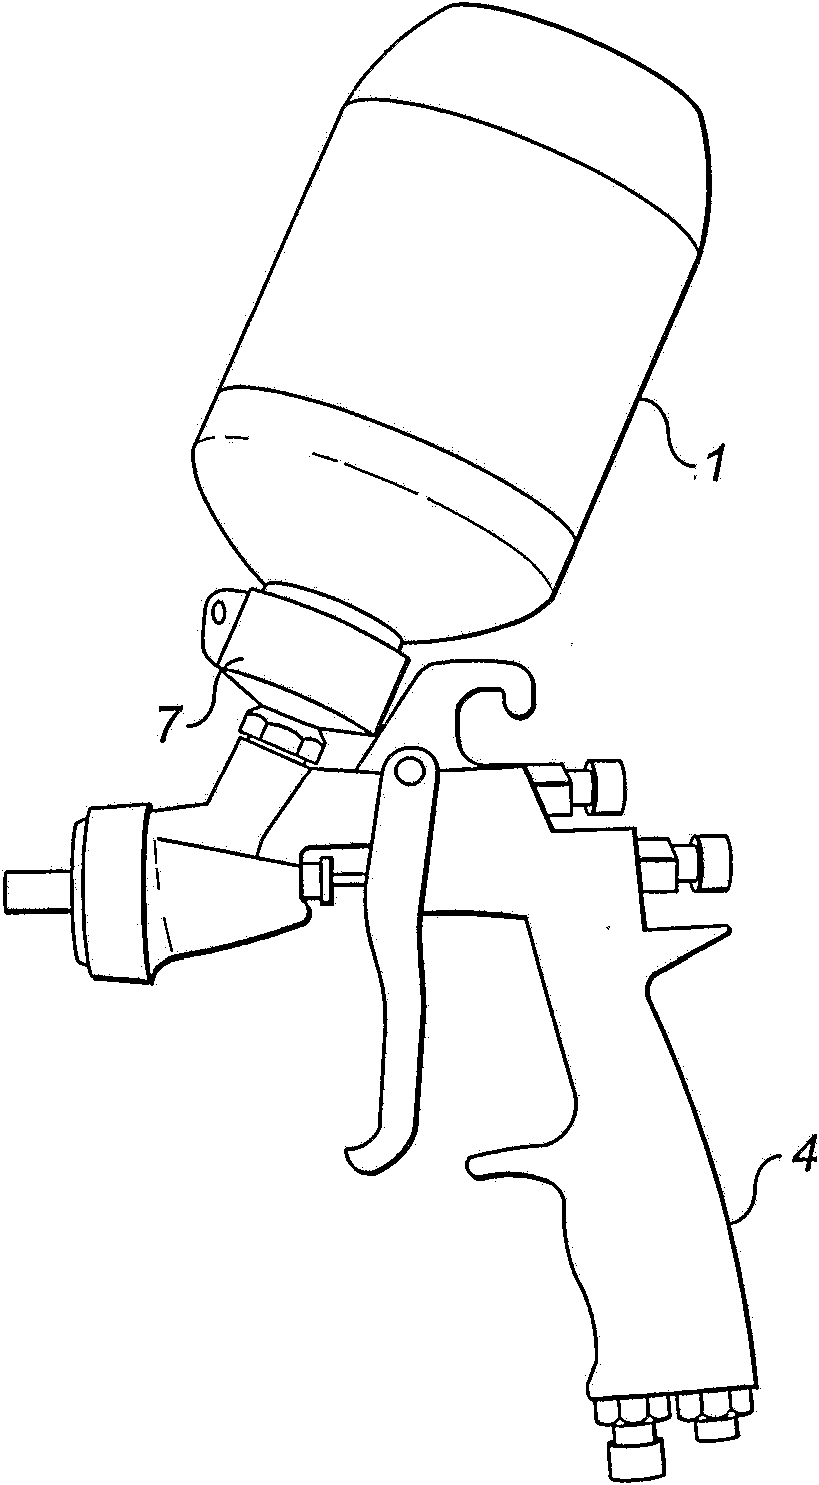 A connector for a gravity feed spray gun, a gravity feed spray gun and a method of preparing a spray paint